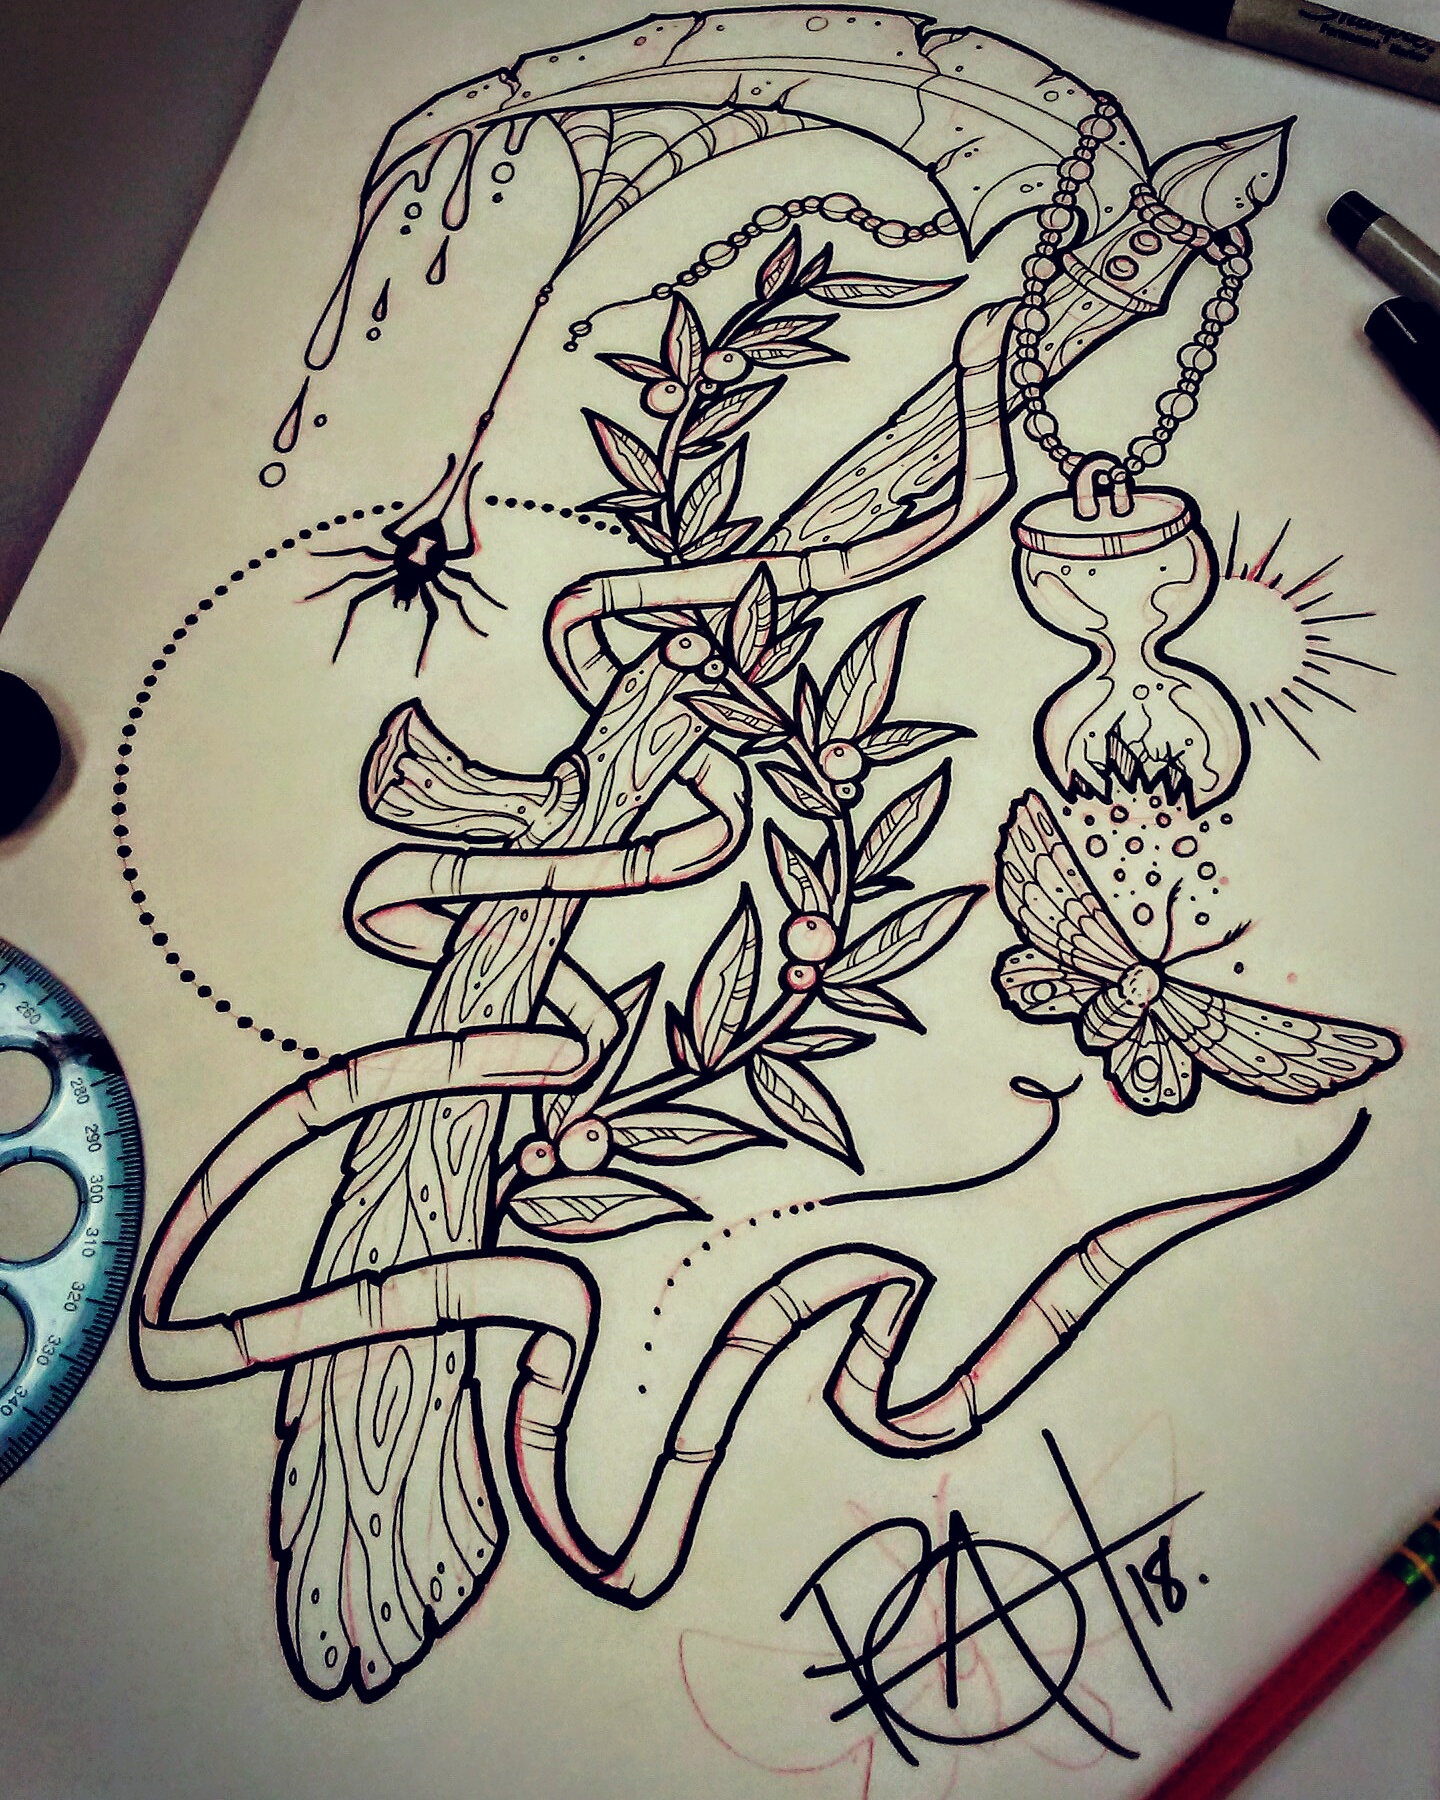 The Dragon Scythe Tattoo by DevilmaycryAQW on DeviantArt